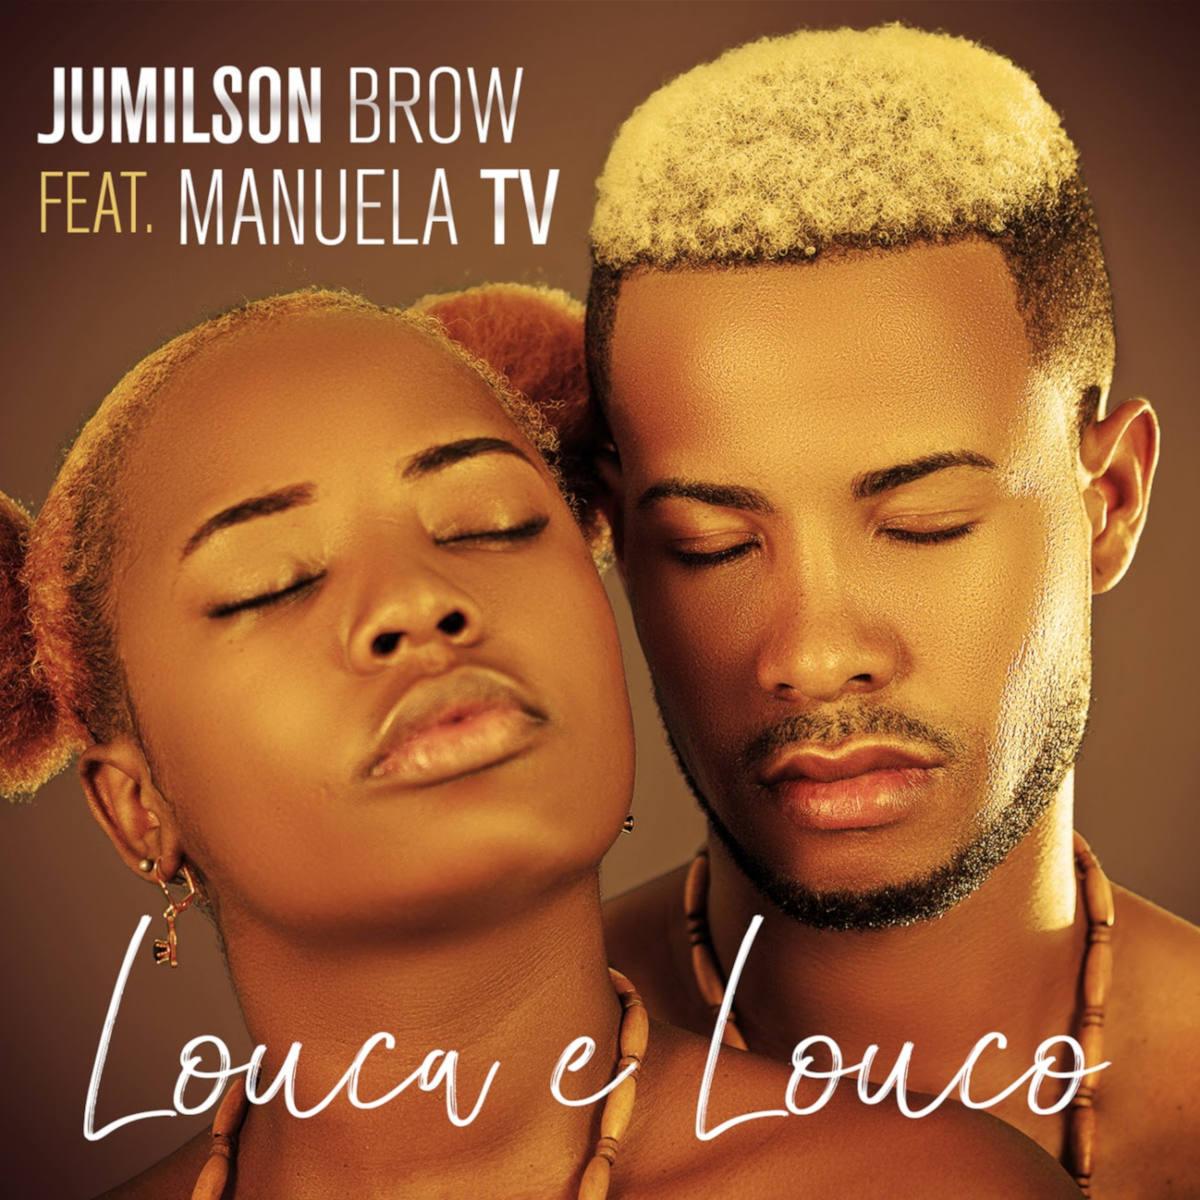 Jumilson Brow ft Manuela TV - Louca e Louco